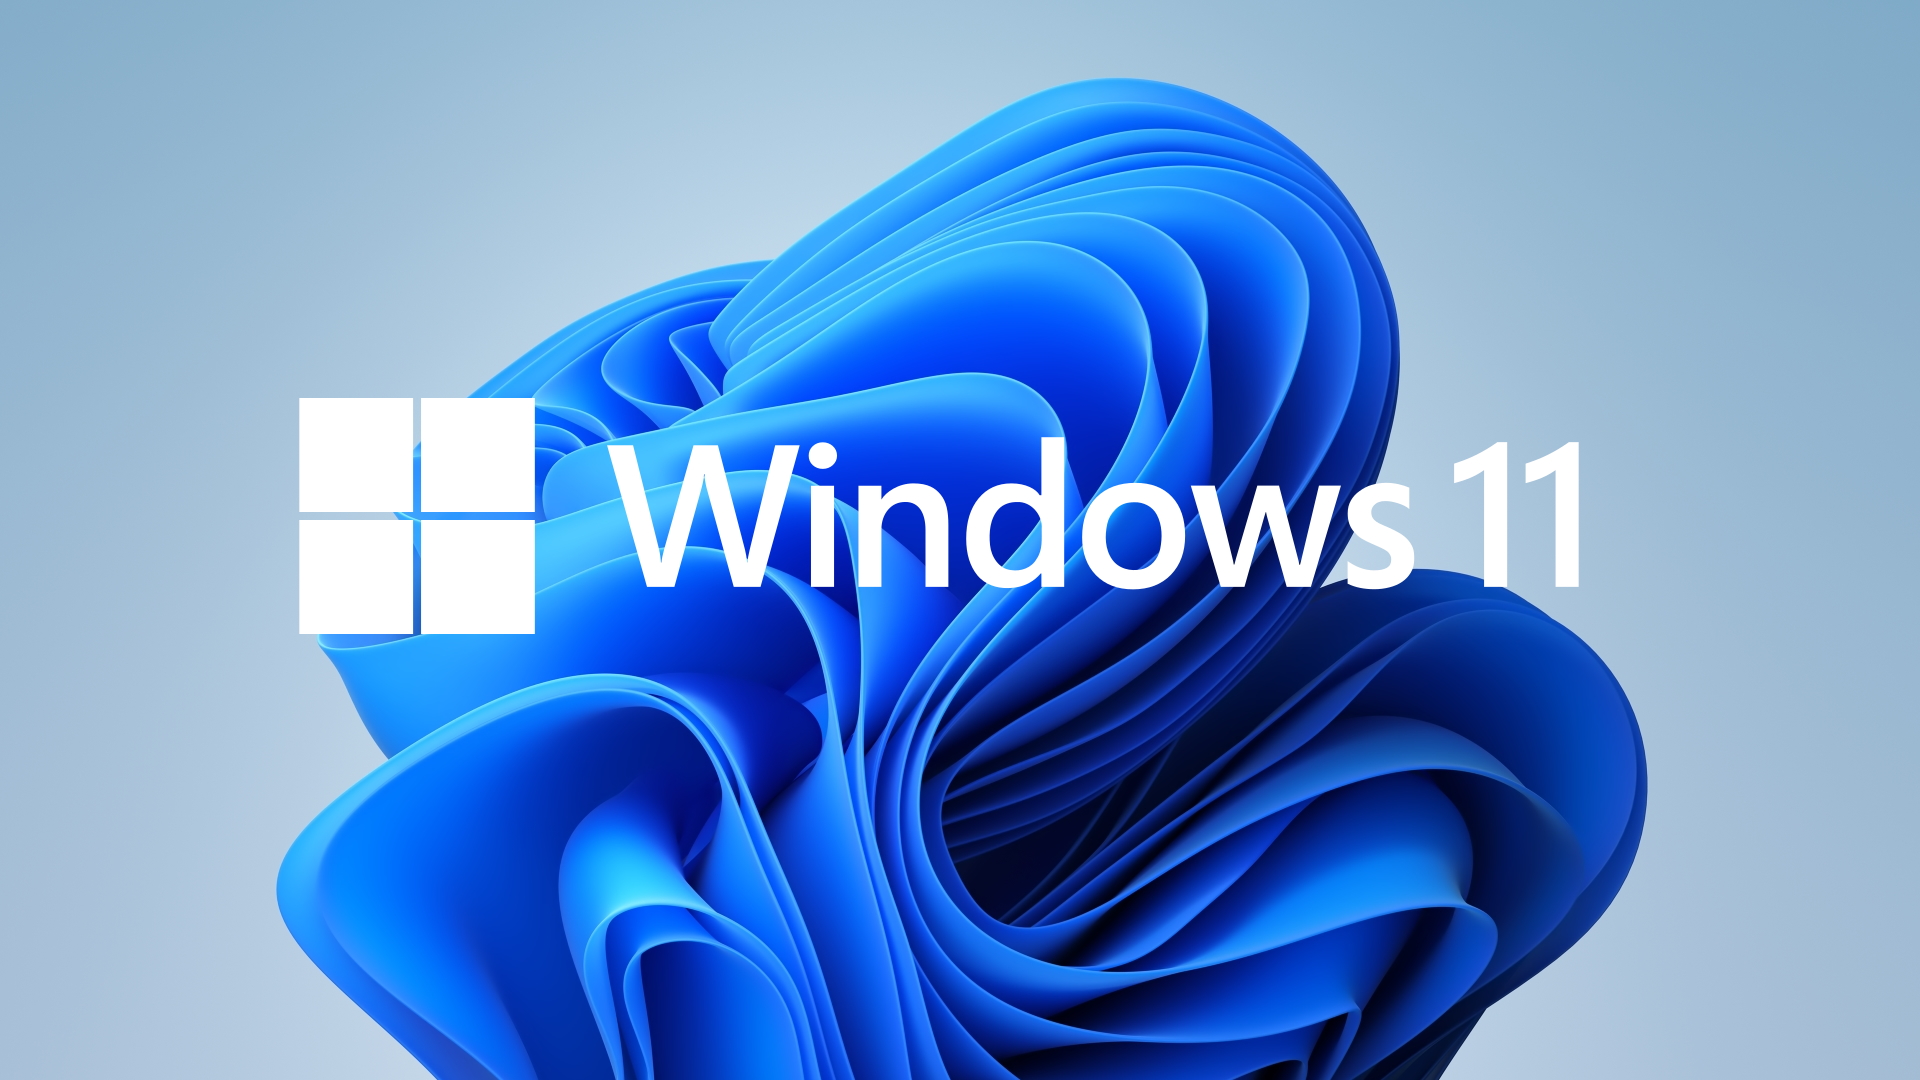 3 Ways to Upgrade Windows 10 to Windows 11 without TPM 2.0